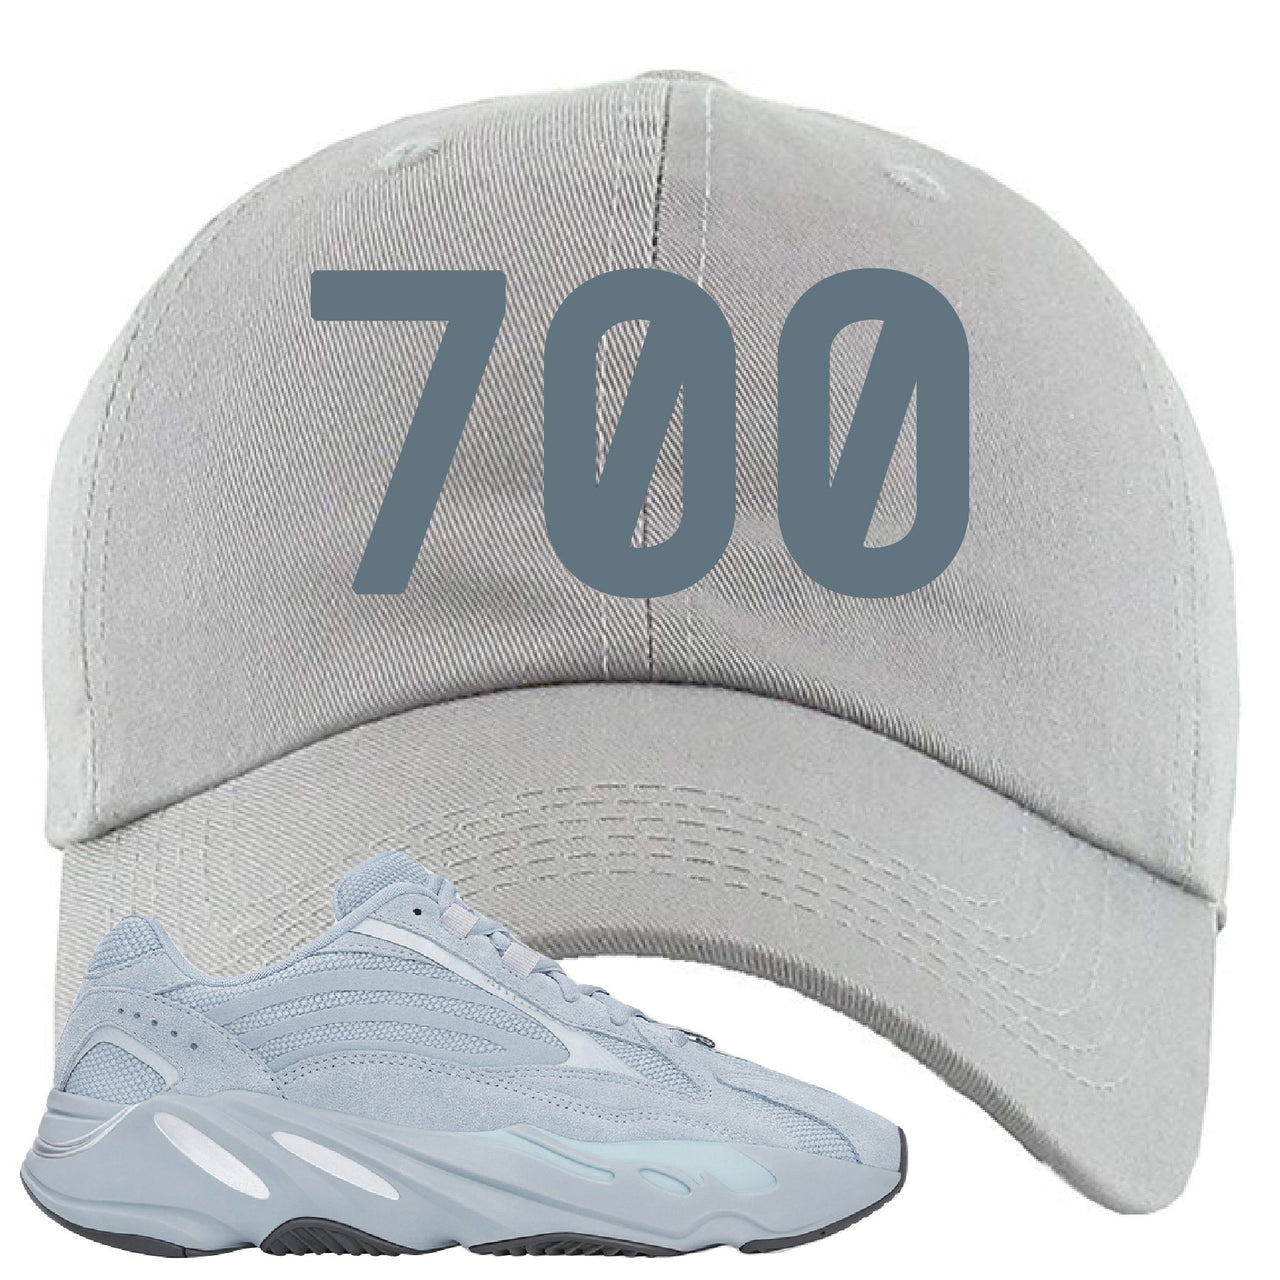 Yeezy Boost 700 V2 Hospital Blue 700 Sneaker Matching Light Gray Dad Hat